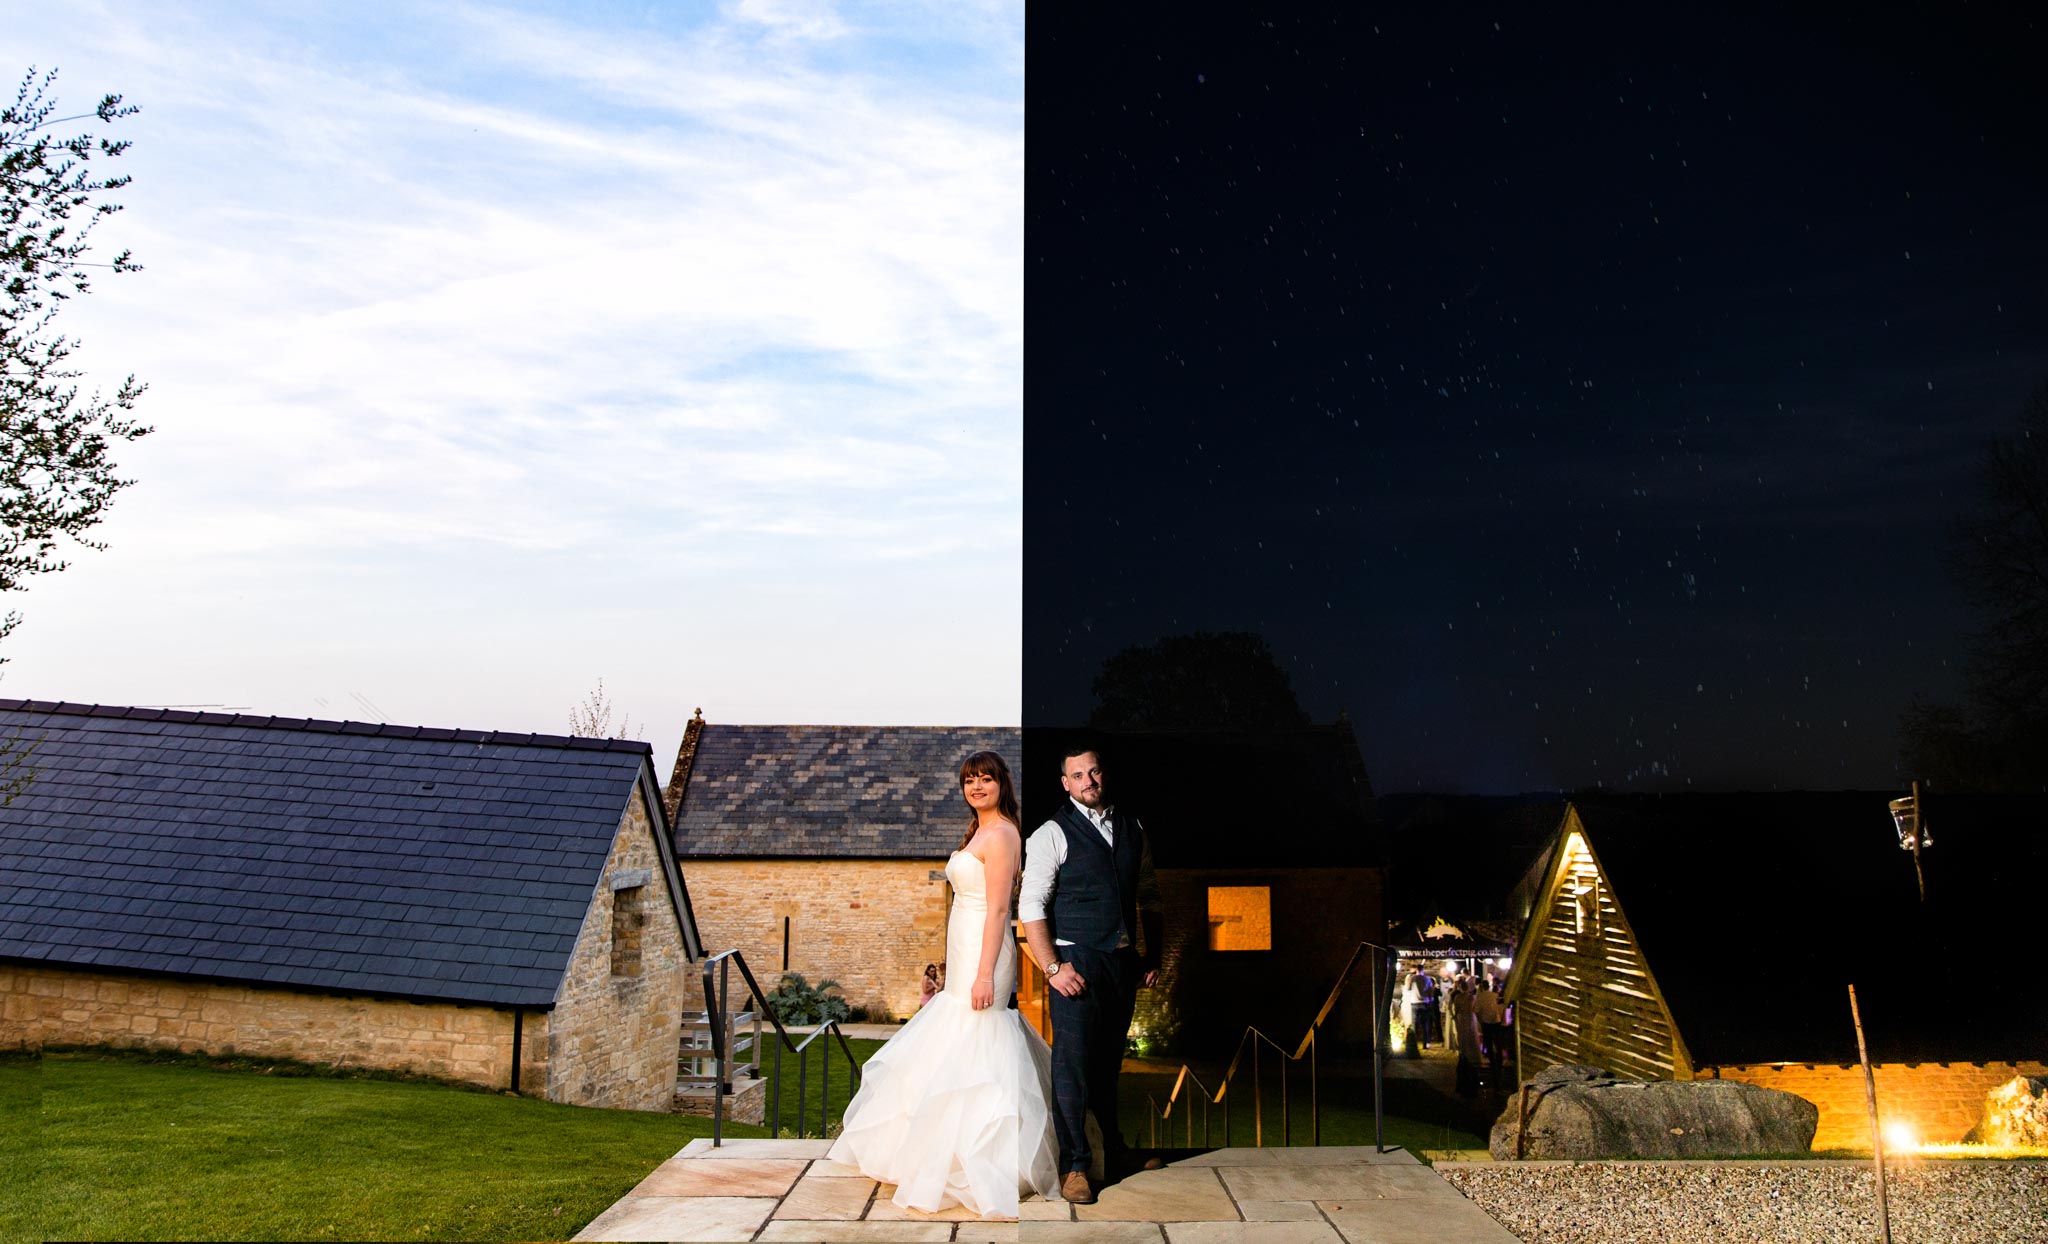 Cool wedding photos fro The Barn at Upcote